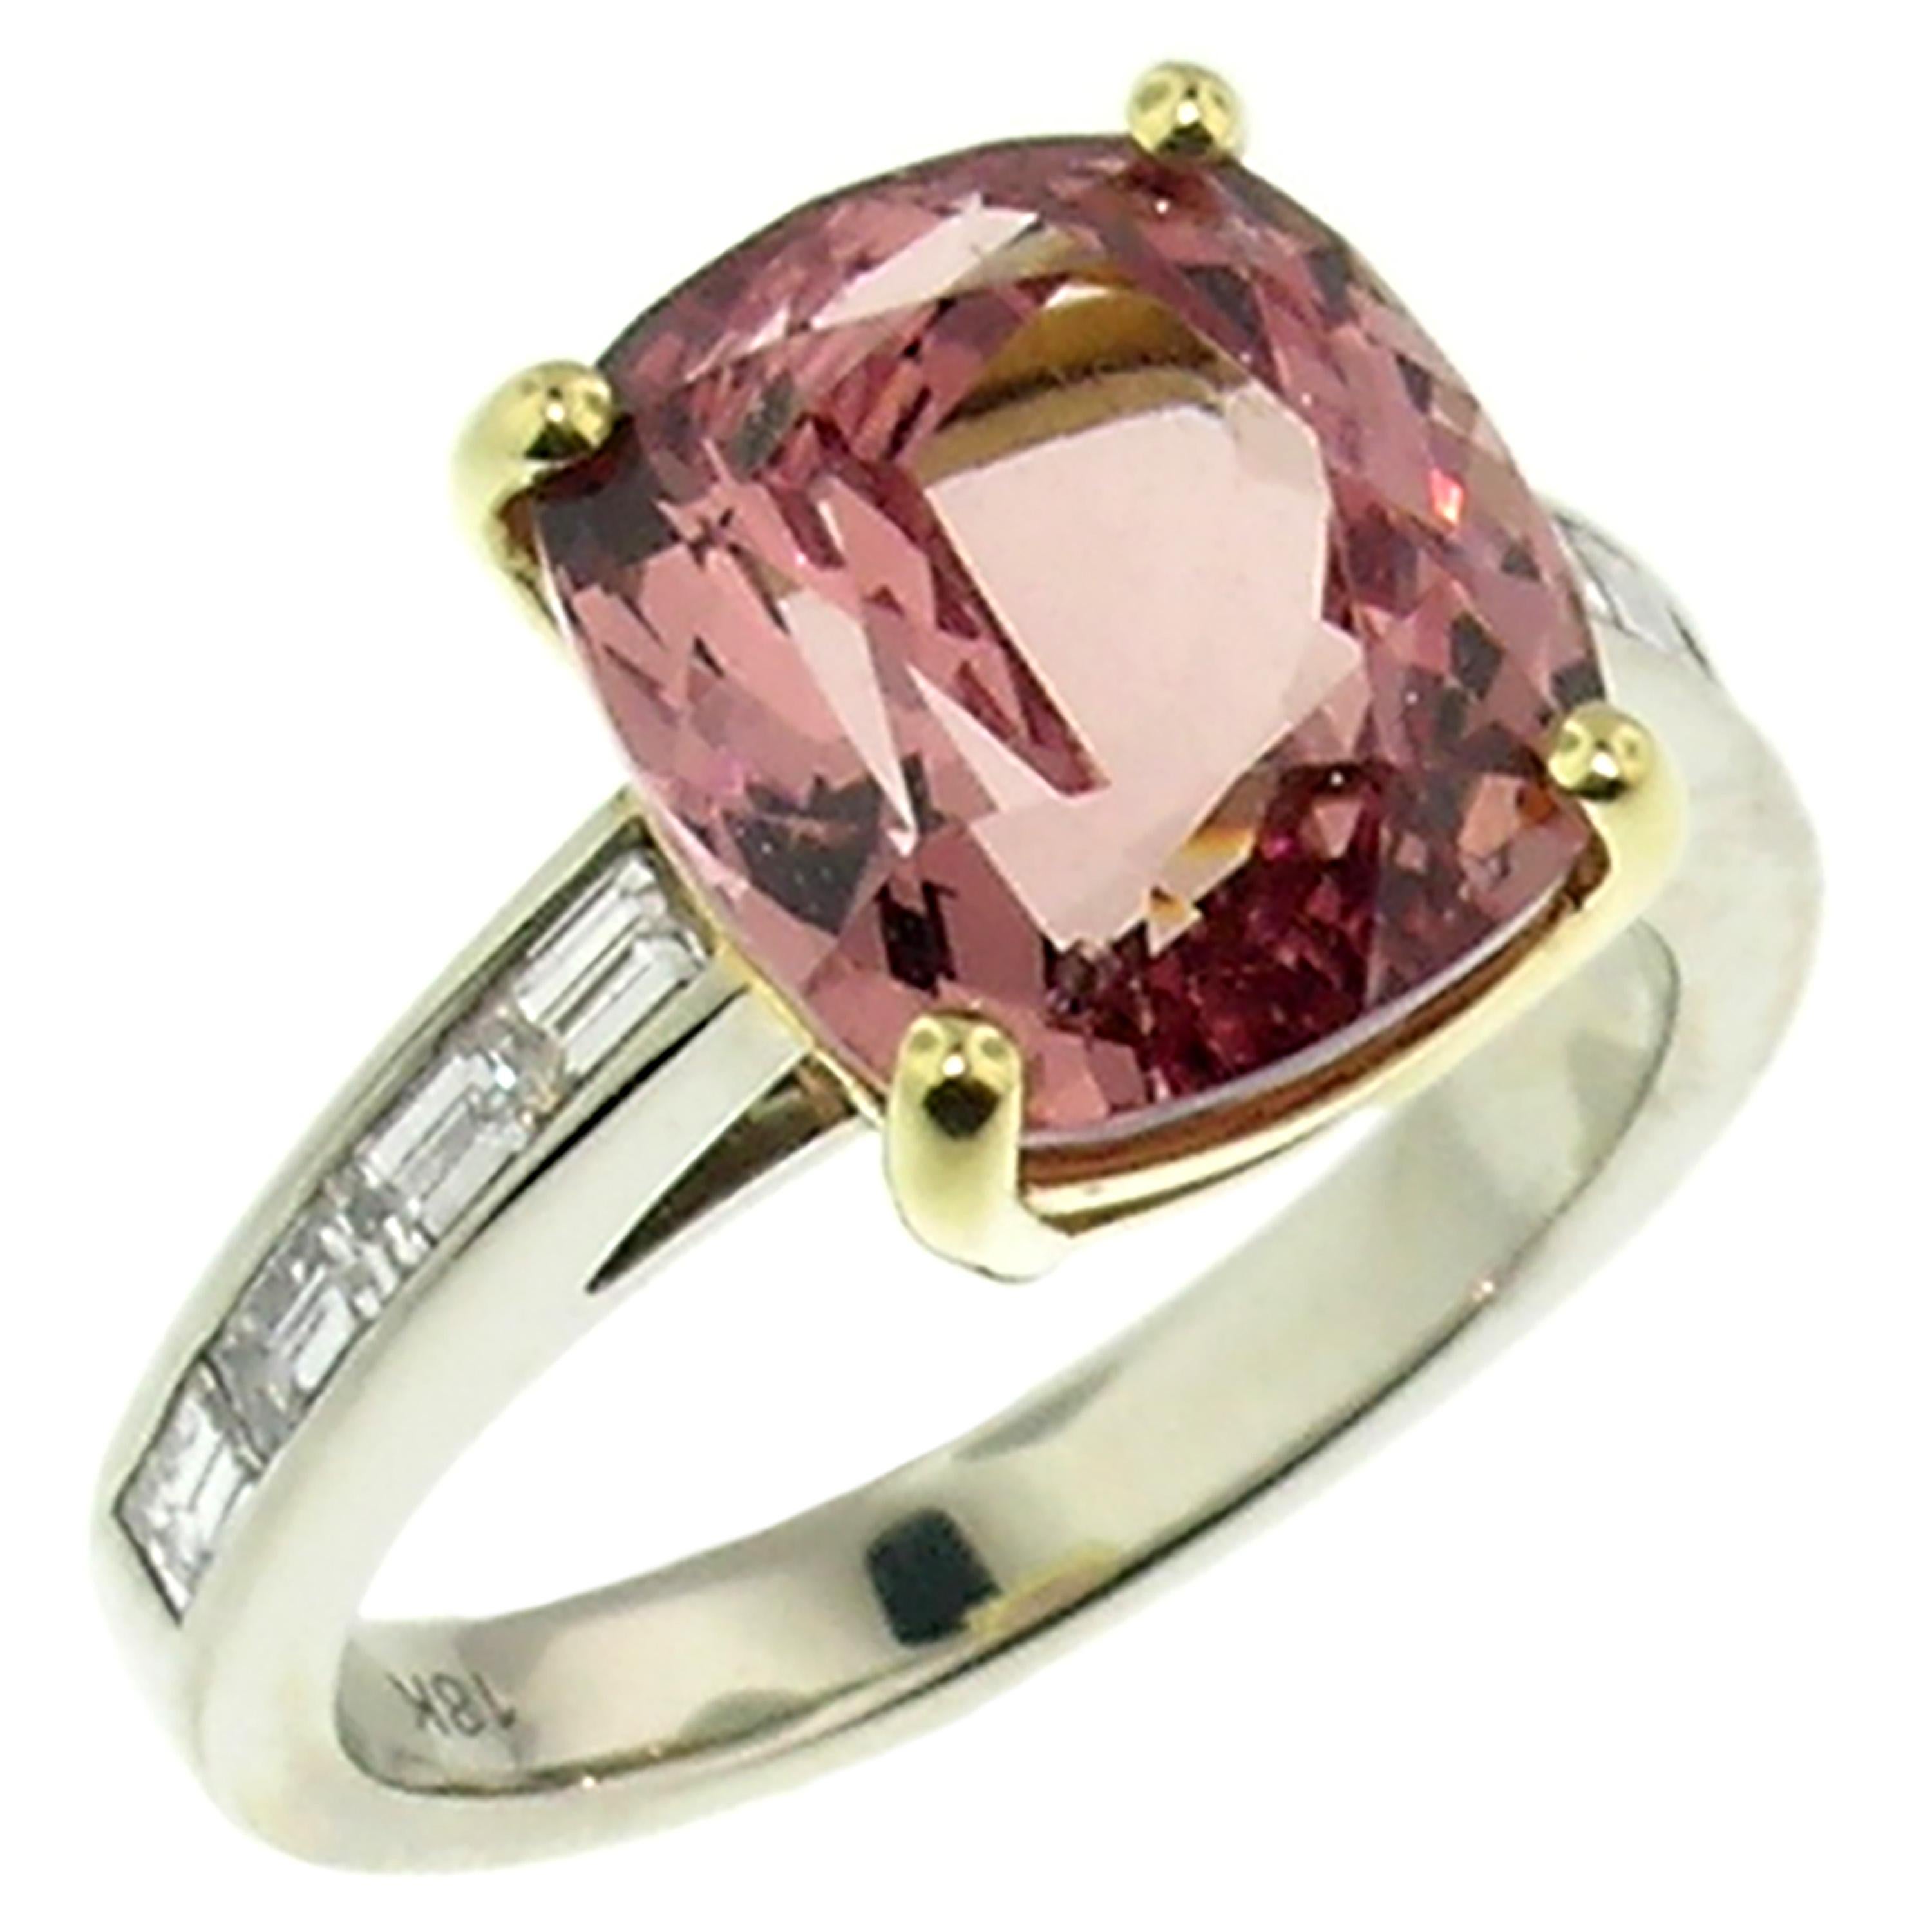 6.83 Carat Mahenge Pink Garnet in 18kt Gold and Diamond Ring by Cynthia Scott